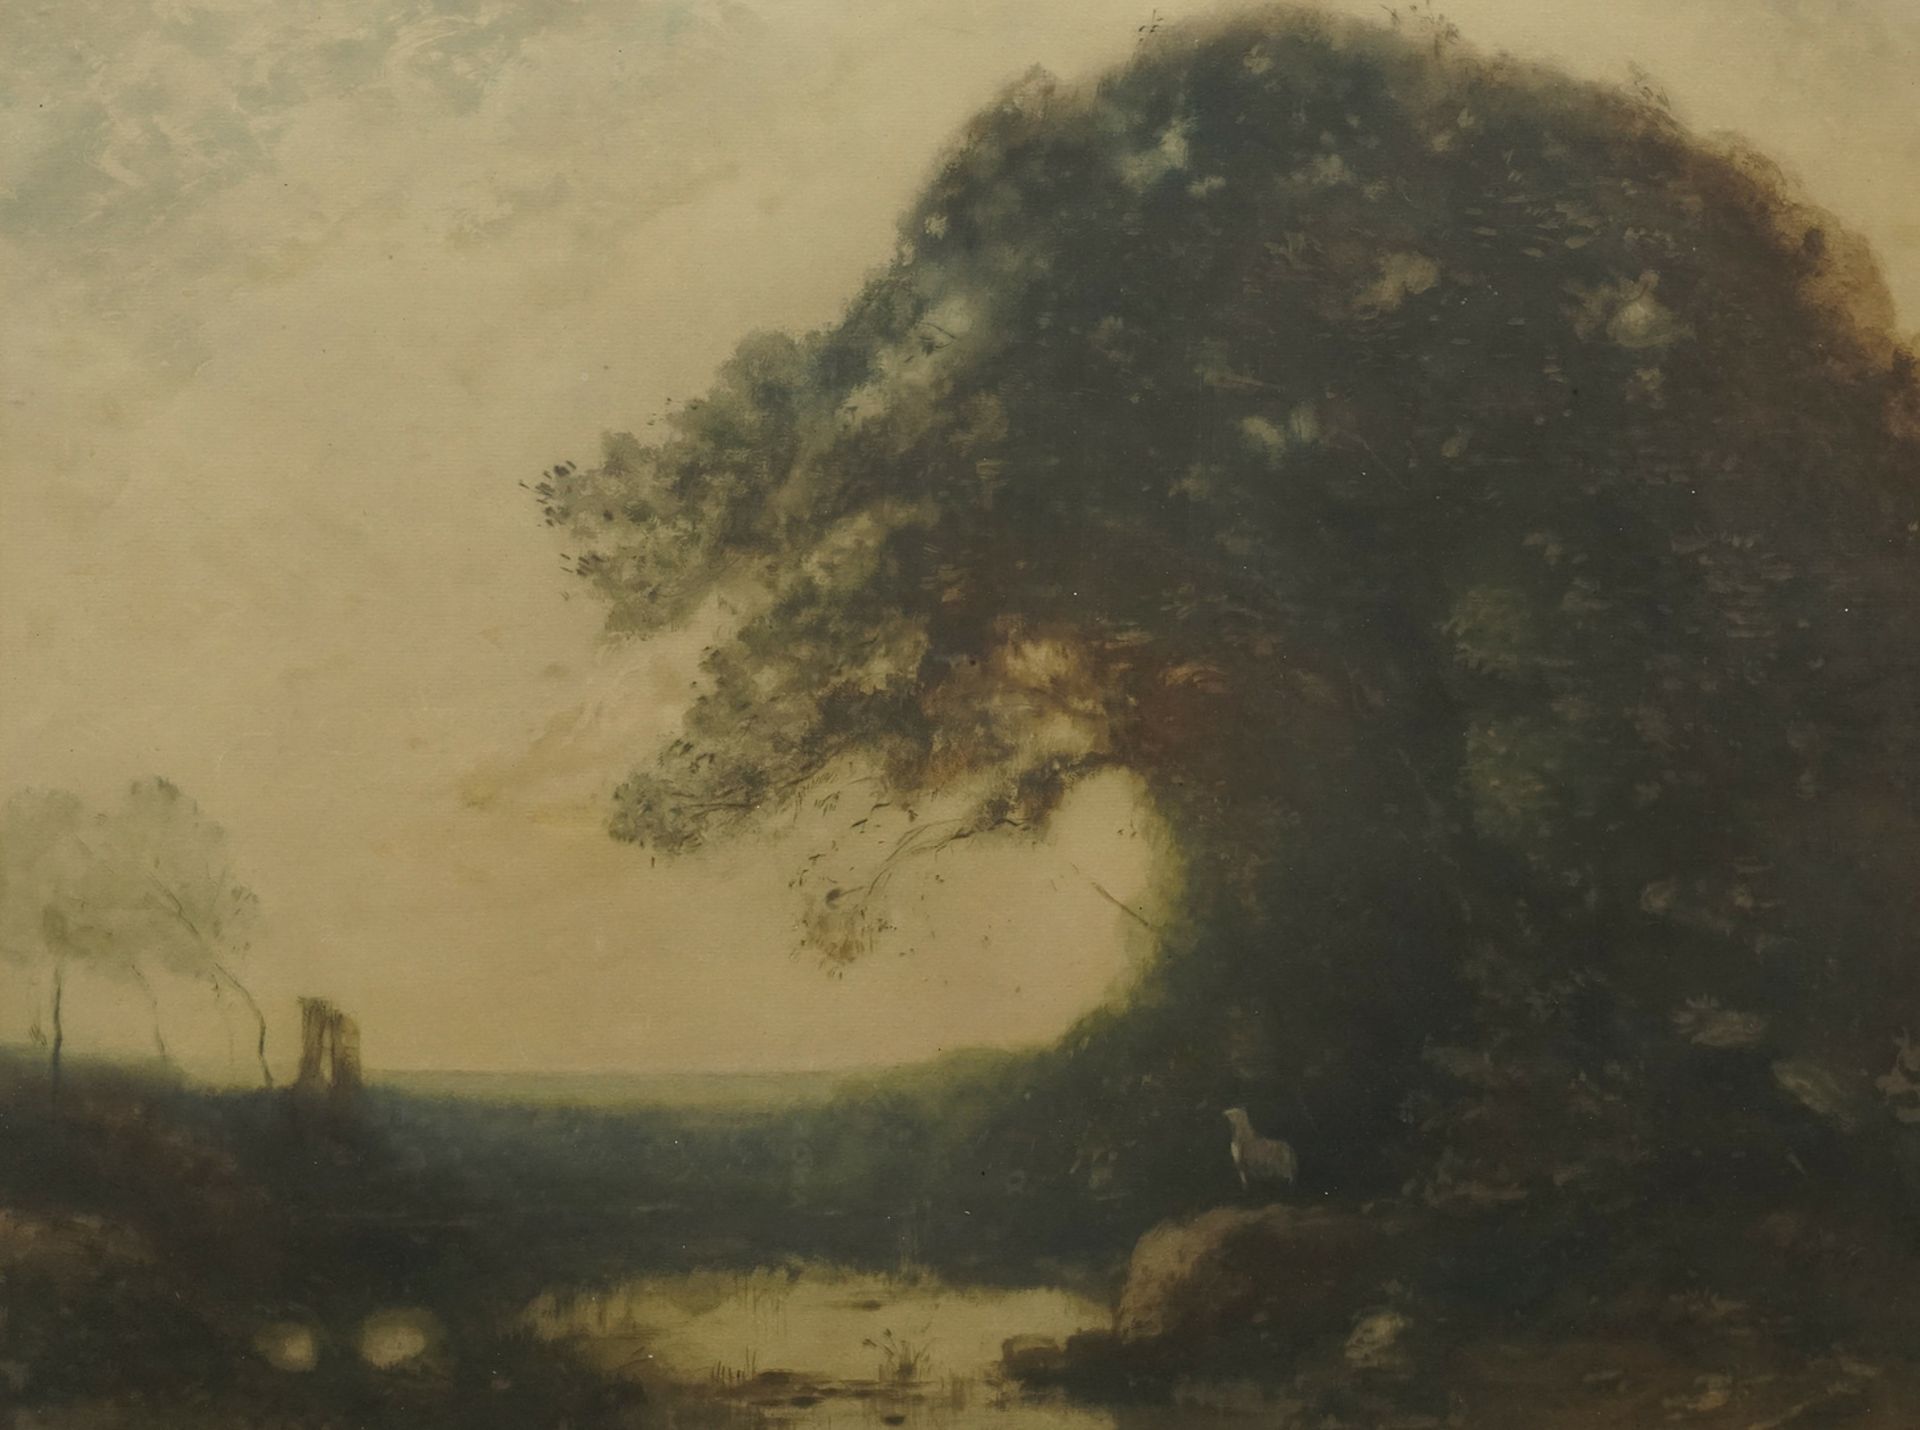 A. Brunet, Landscape with pond